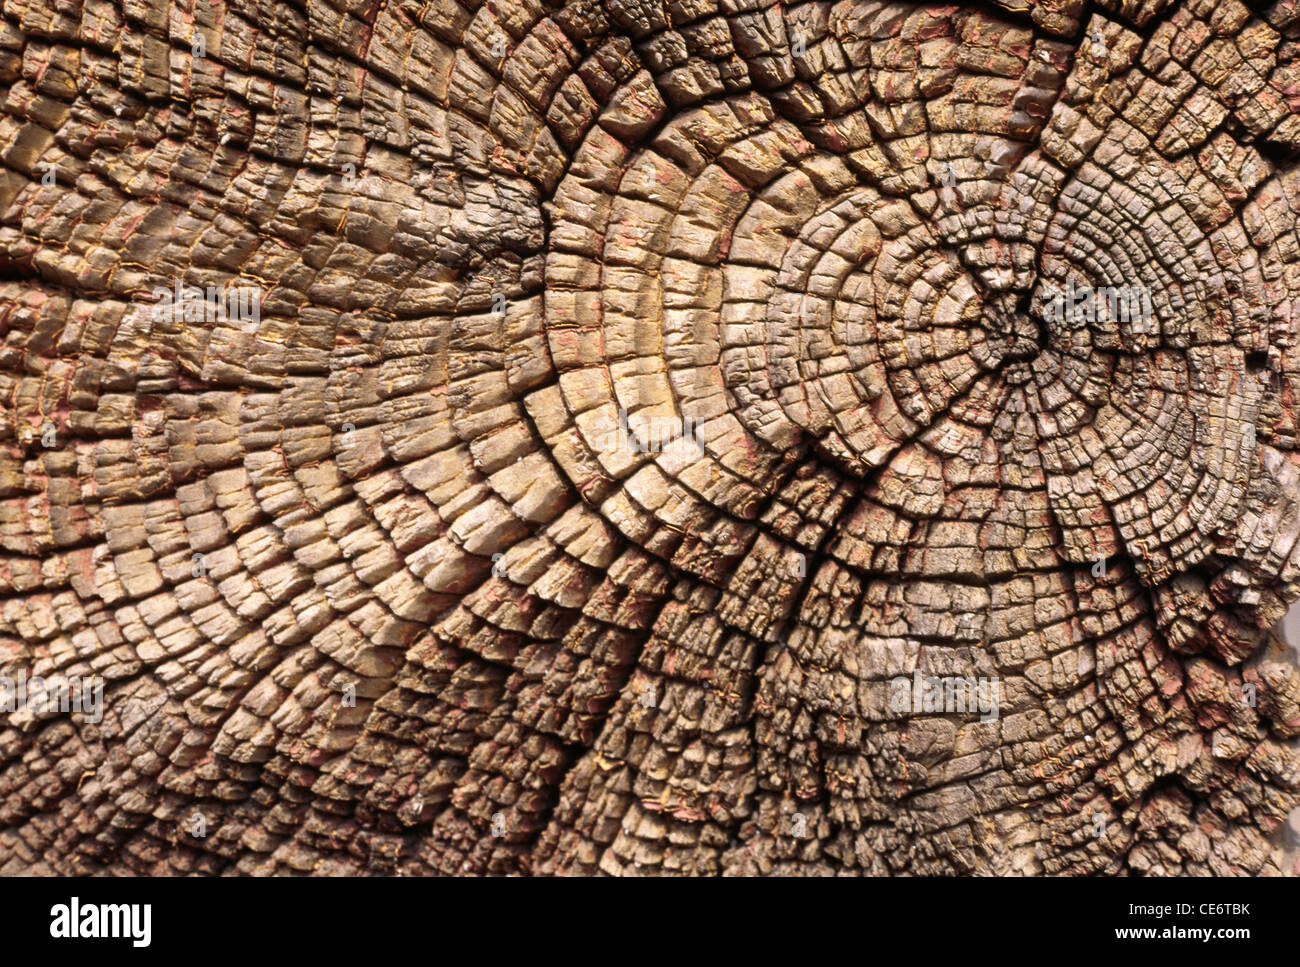 Holz Alter Linien Kreisen Textur Querschnitt Stockfoto